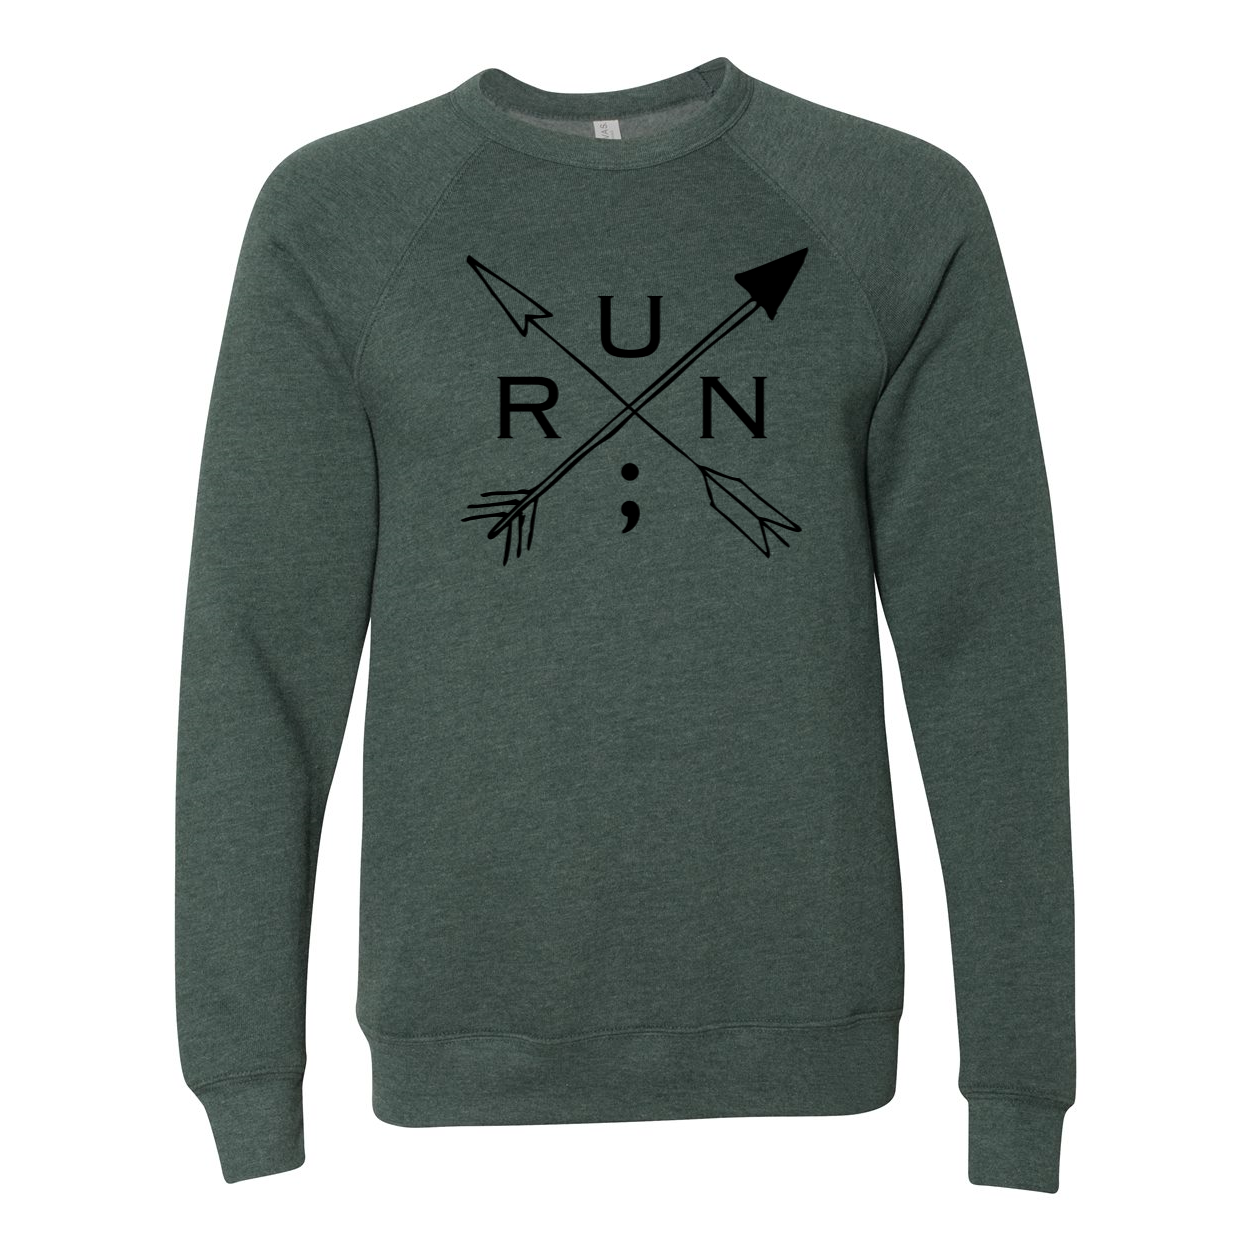 Run Arrows - Unisex Crewneck